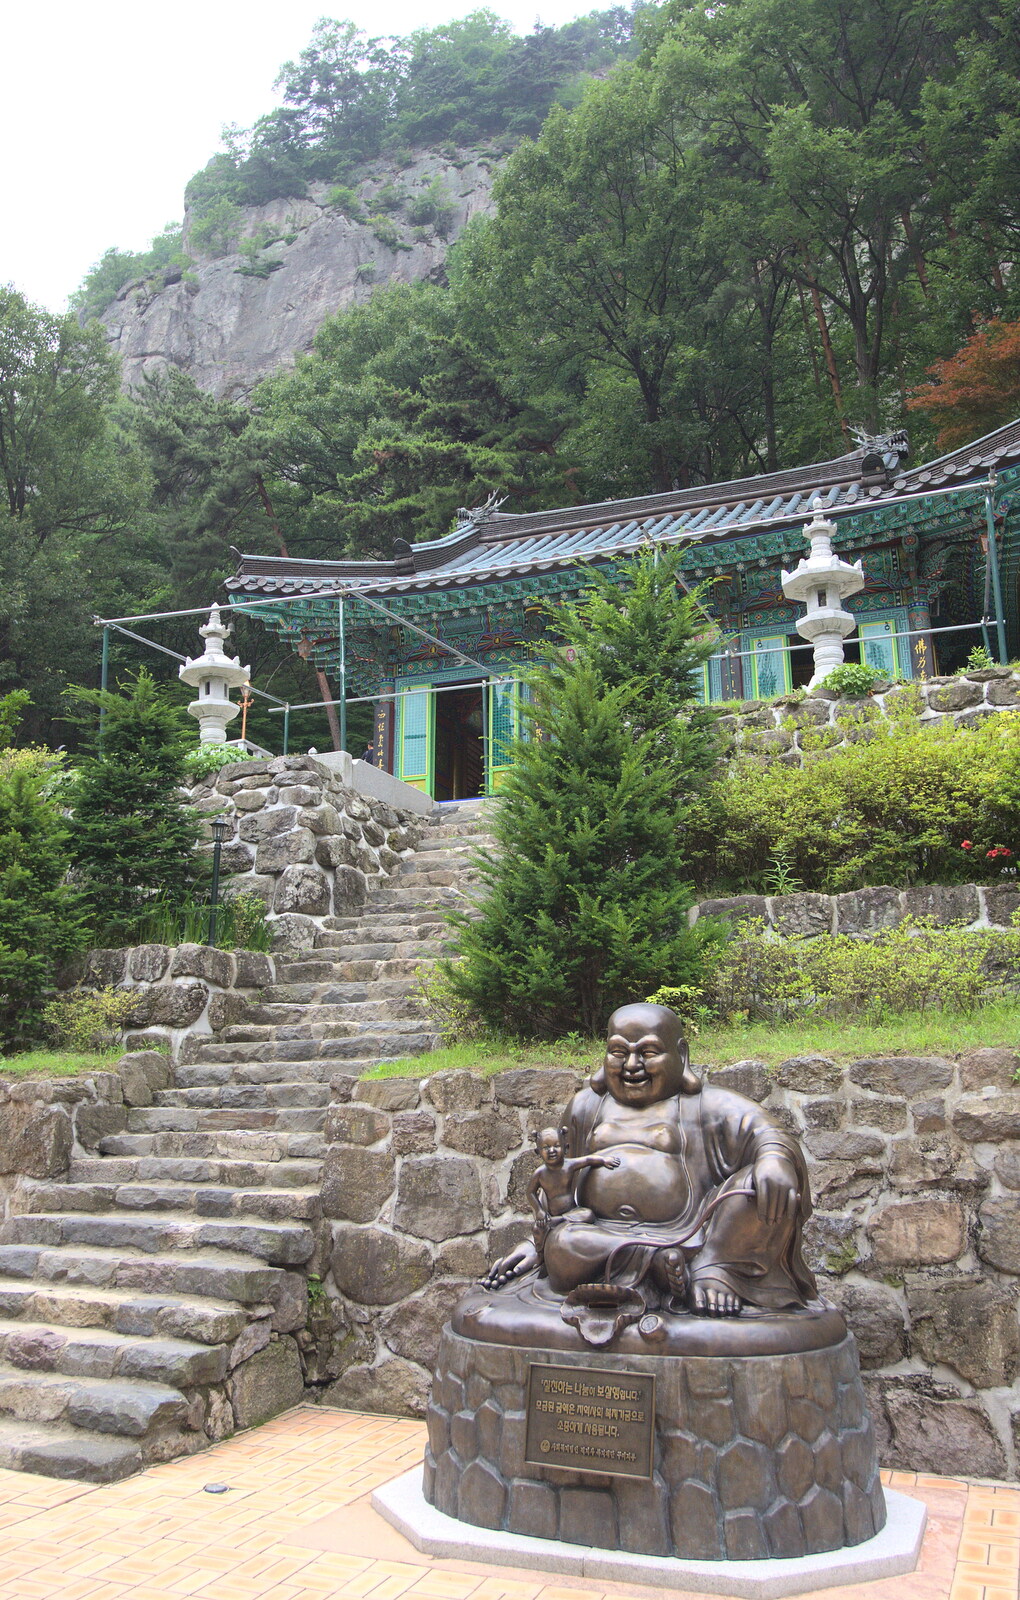 A seated Buddha from Working at Samsung, and Geumosan Mountain, Gumi, Gyeongsangbuk-do, Korea - 24th June 2012